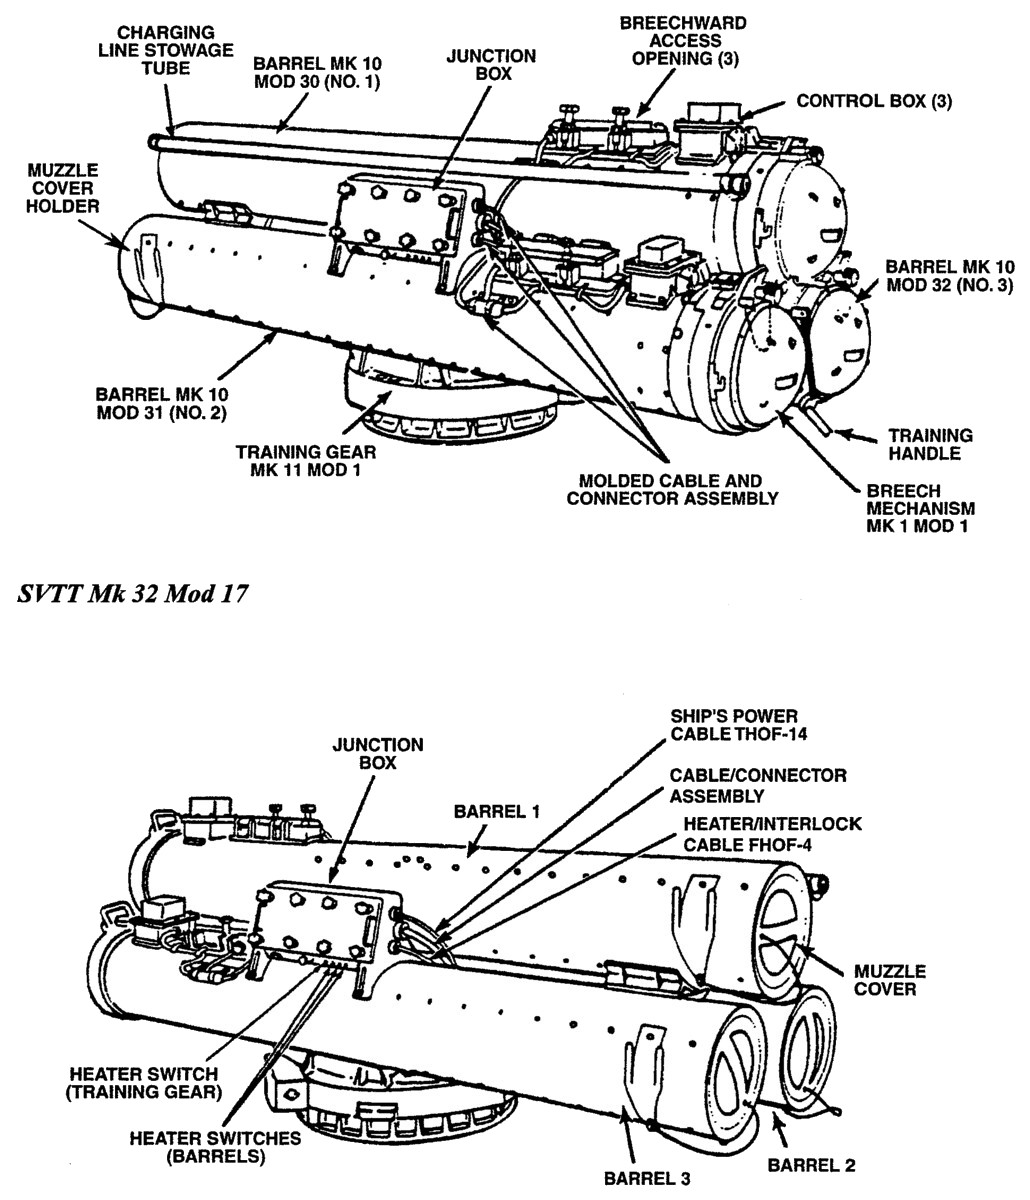 mk-32 mod. 17 torpedo tubes